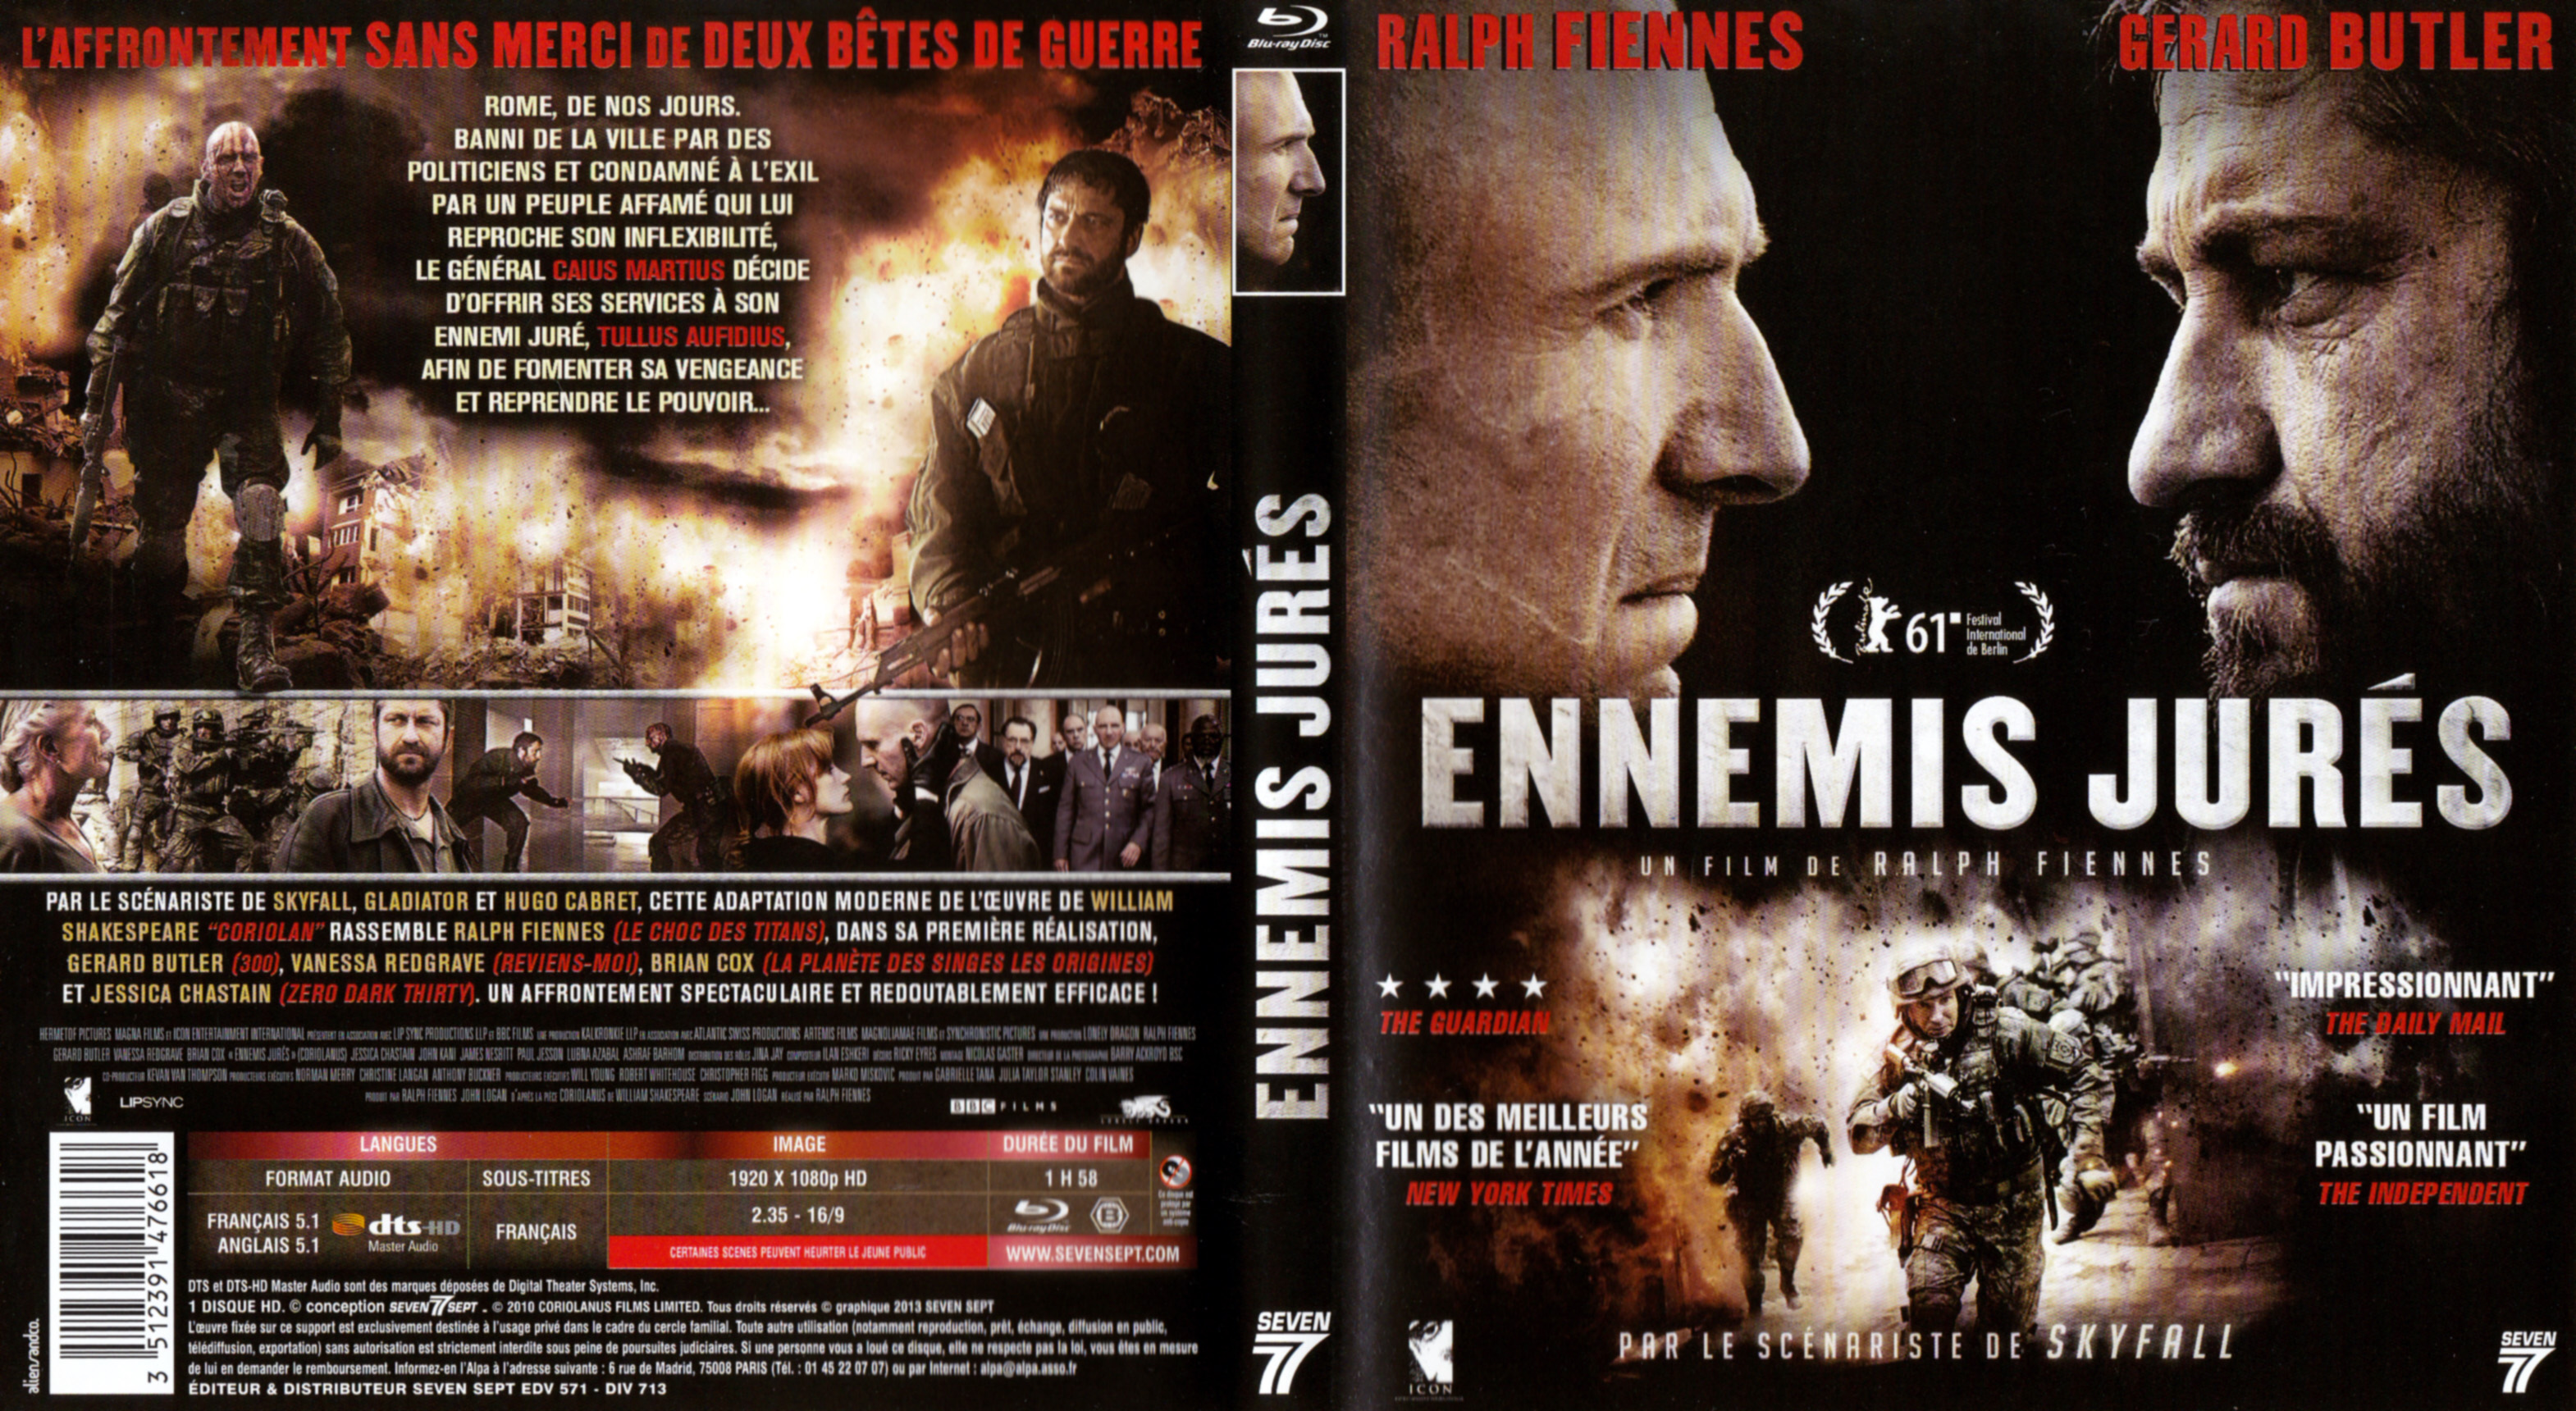 Jaquette DVD Ennemis jurs (BLU-RAY)